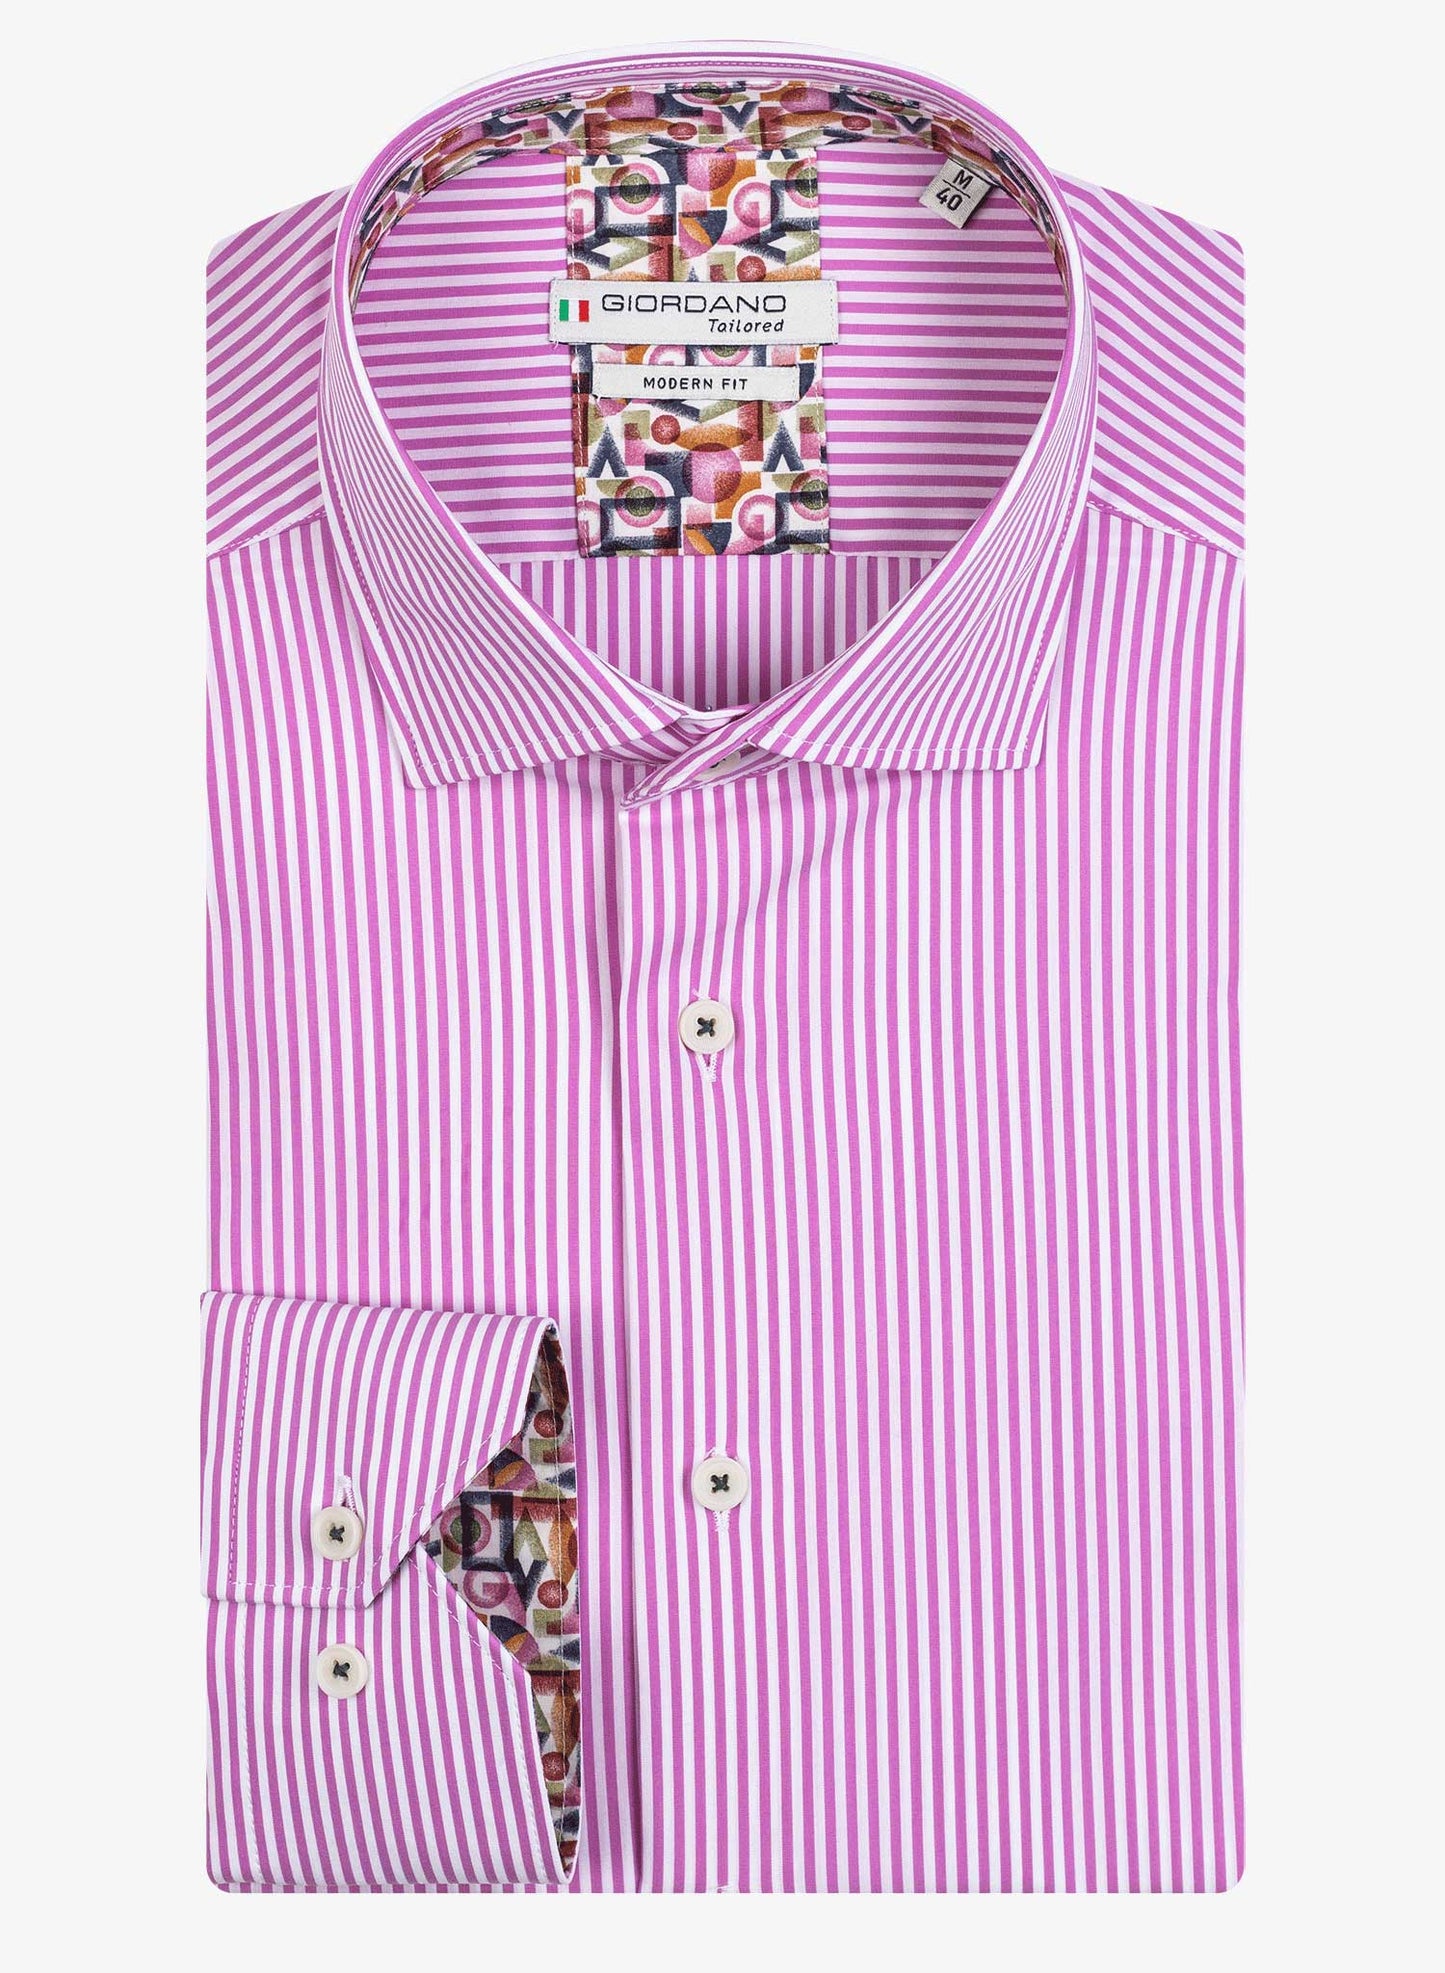 Giordano Long Sleeve Shirt Small Pink Stripe